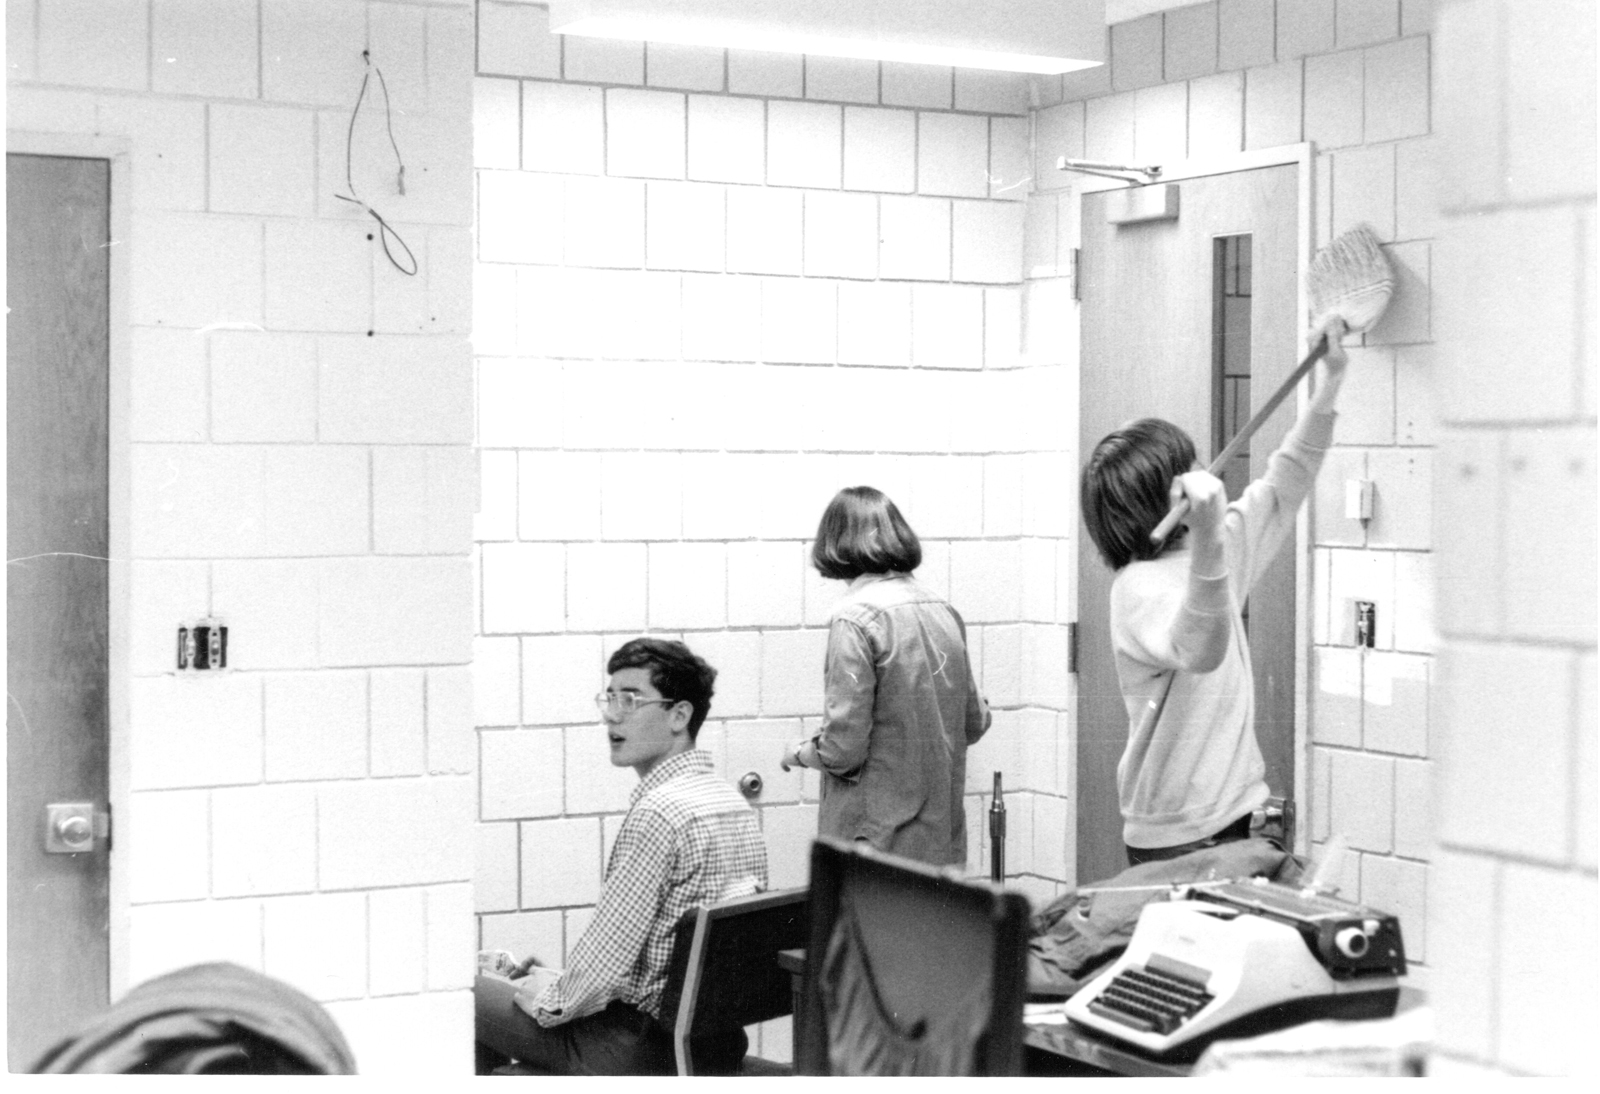 Painting the News Room - Bob Frish and Barbara Learner